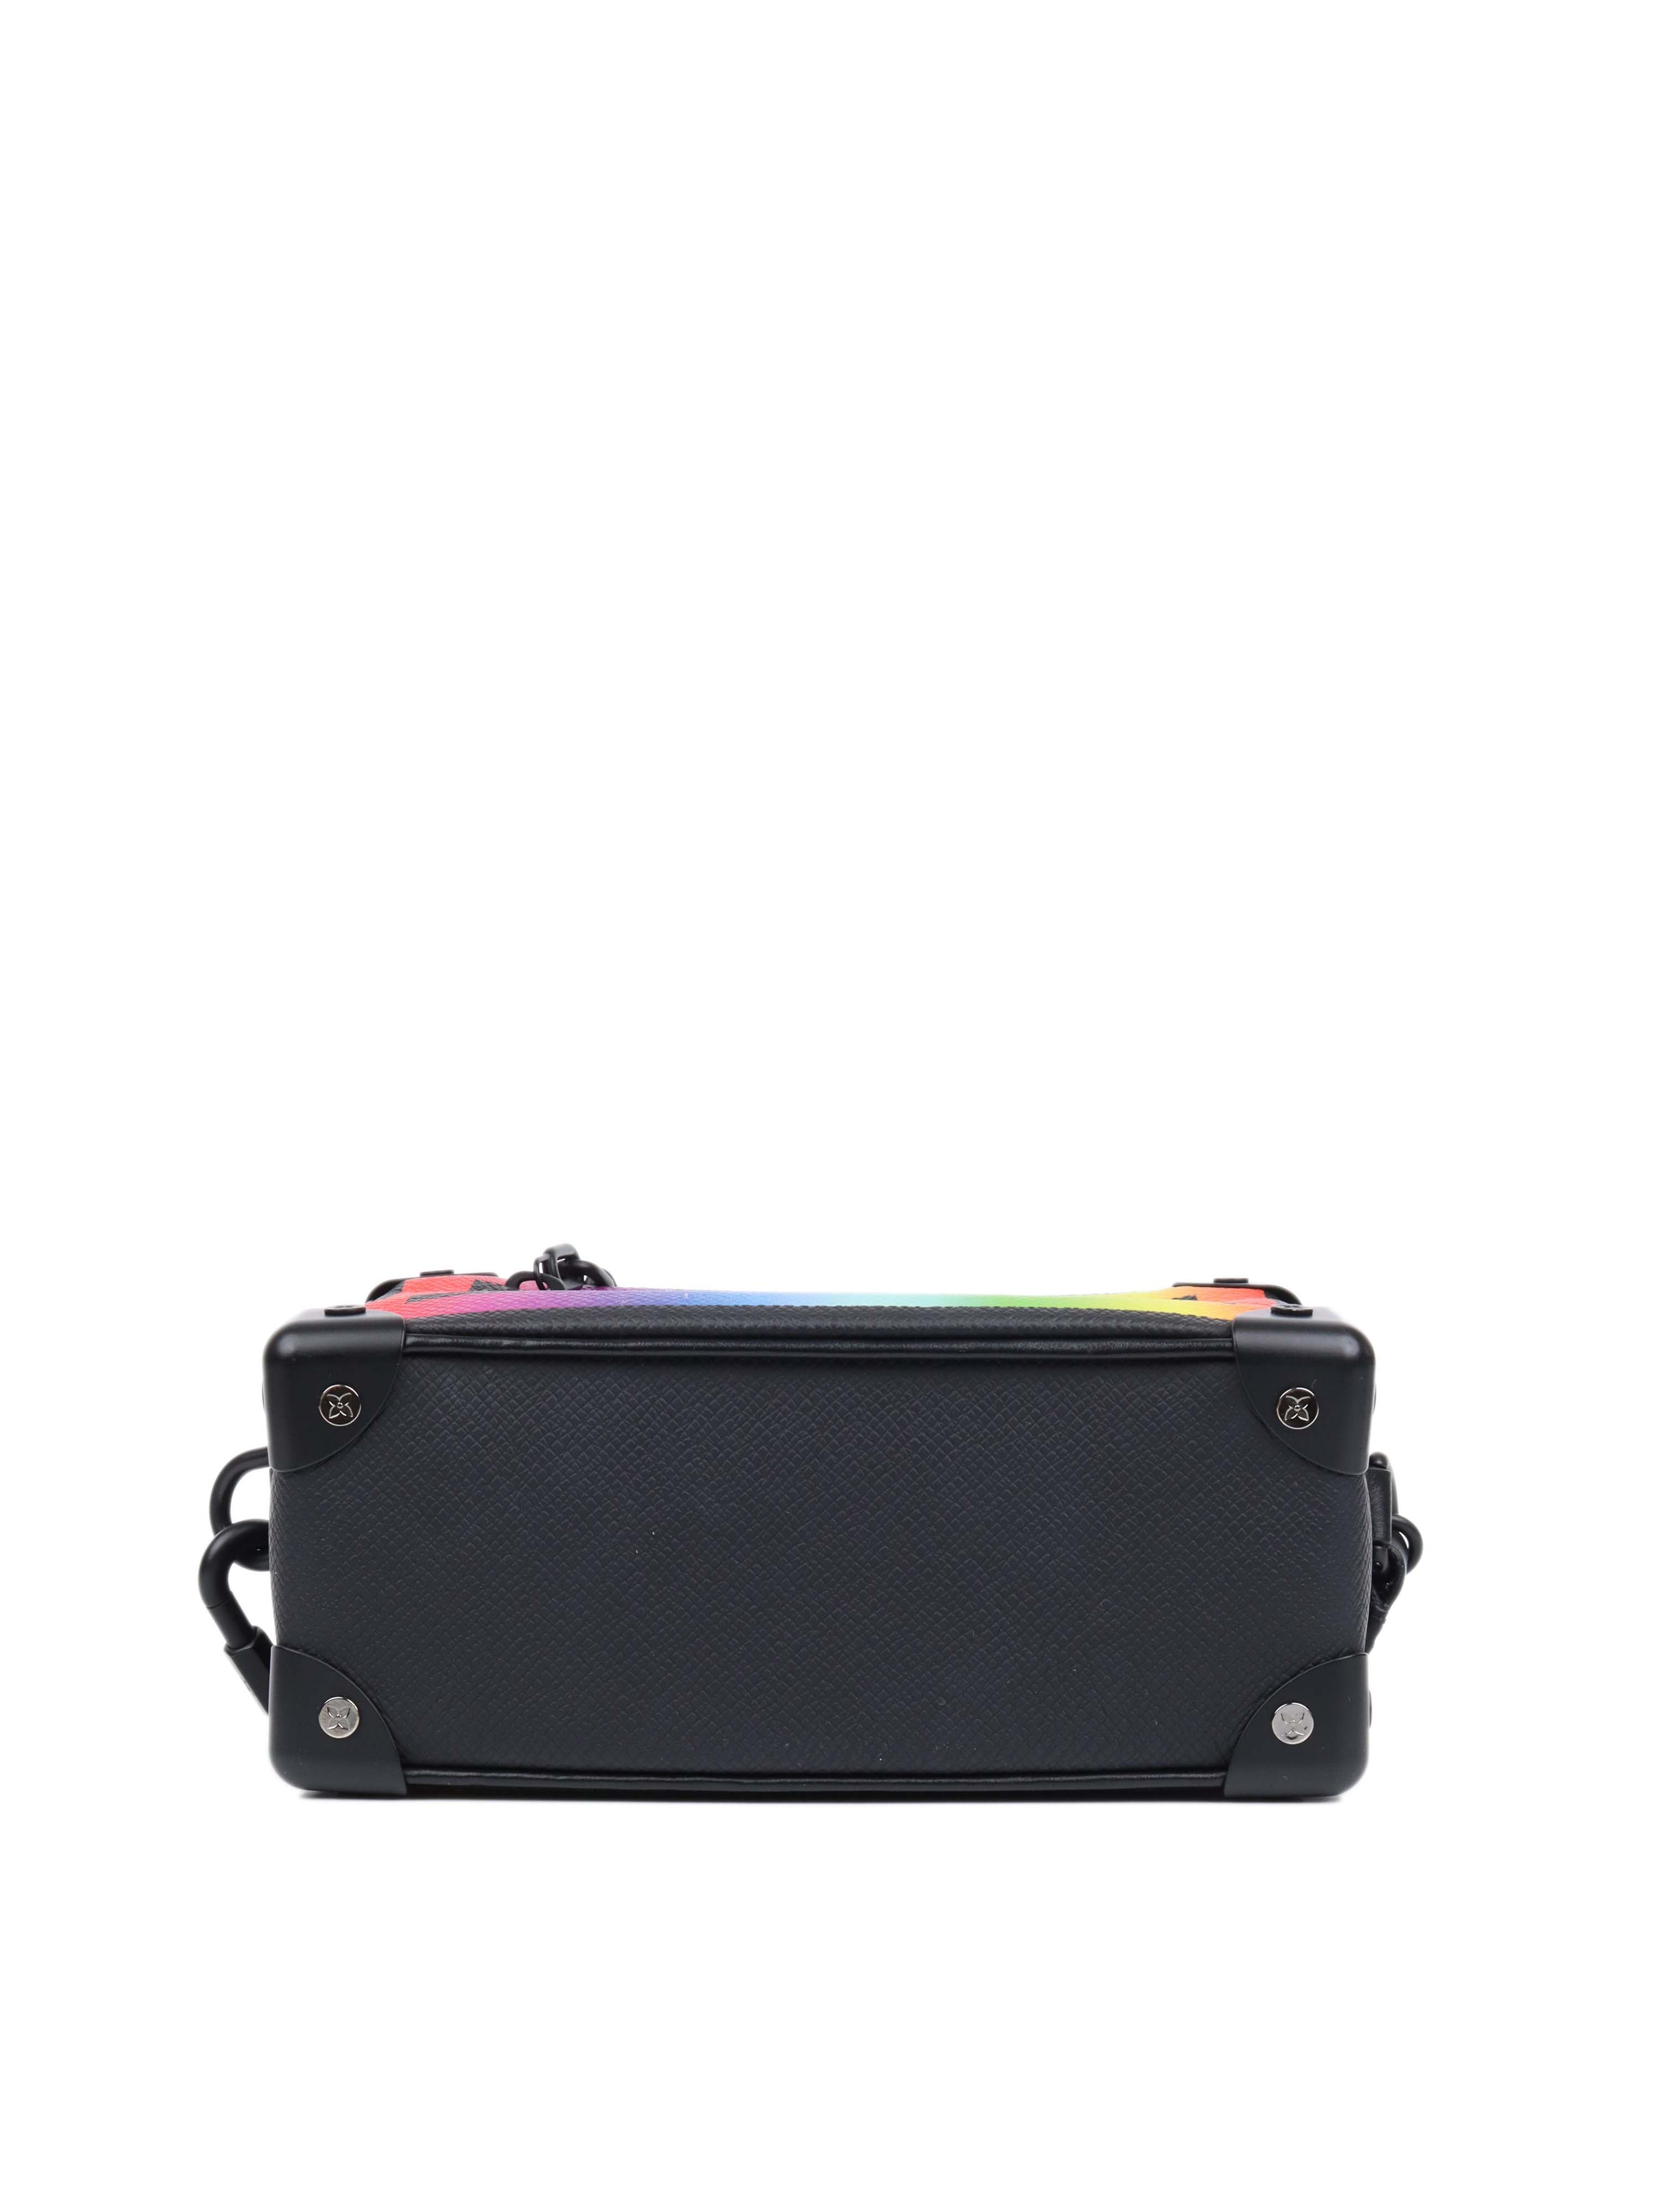 Louis Vuitton Rainbow/Black Soft Trunk Bag